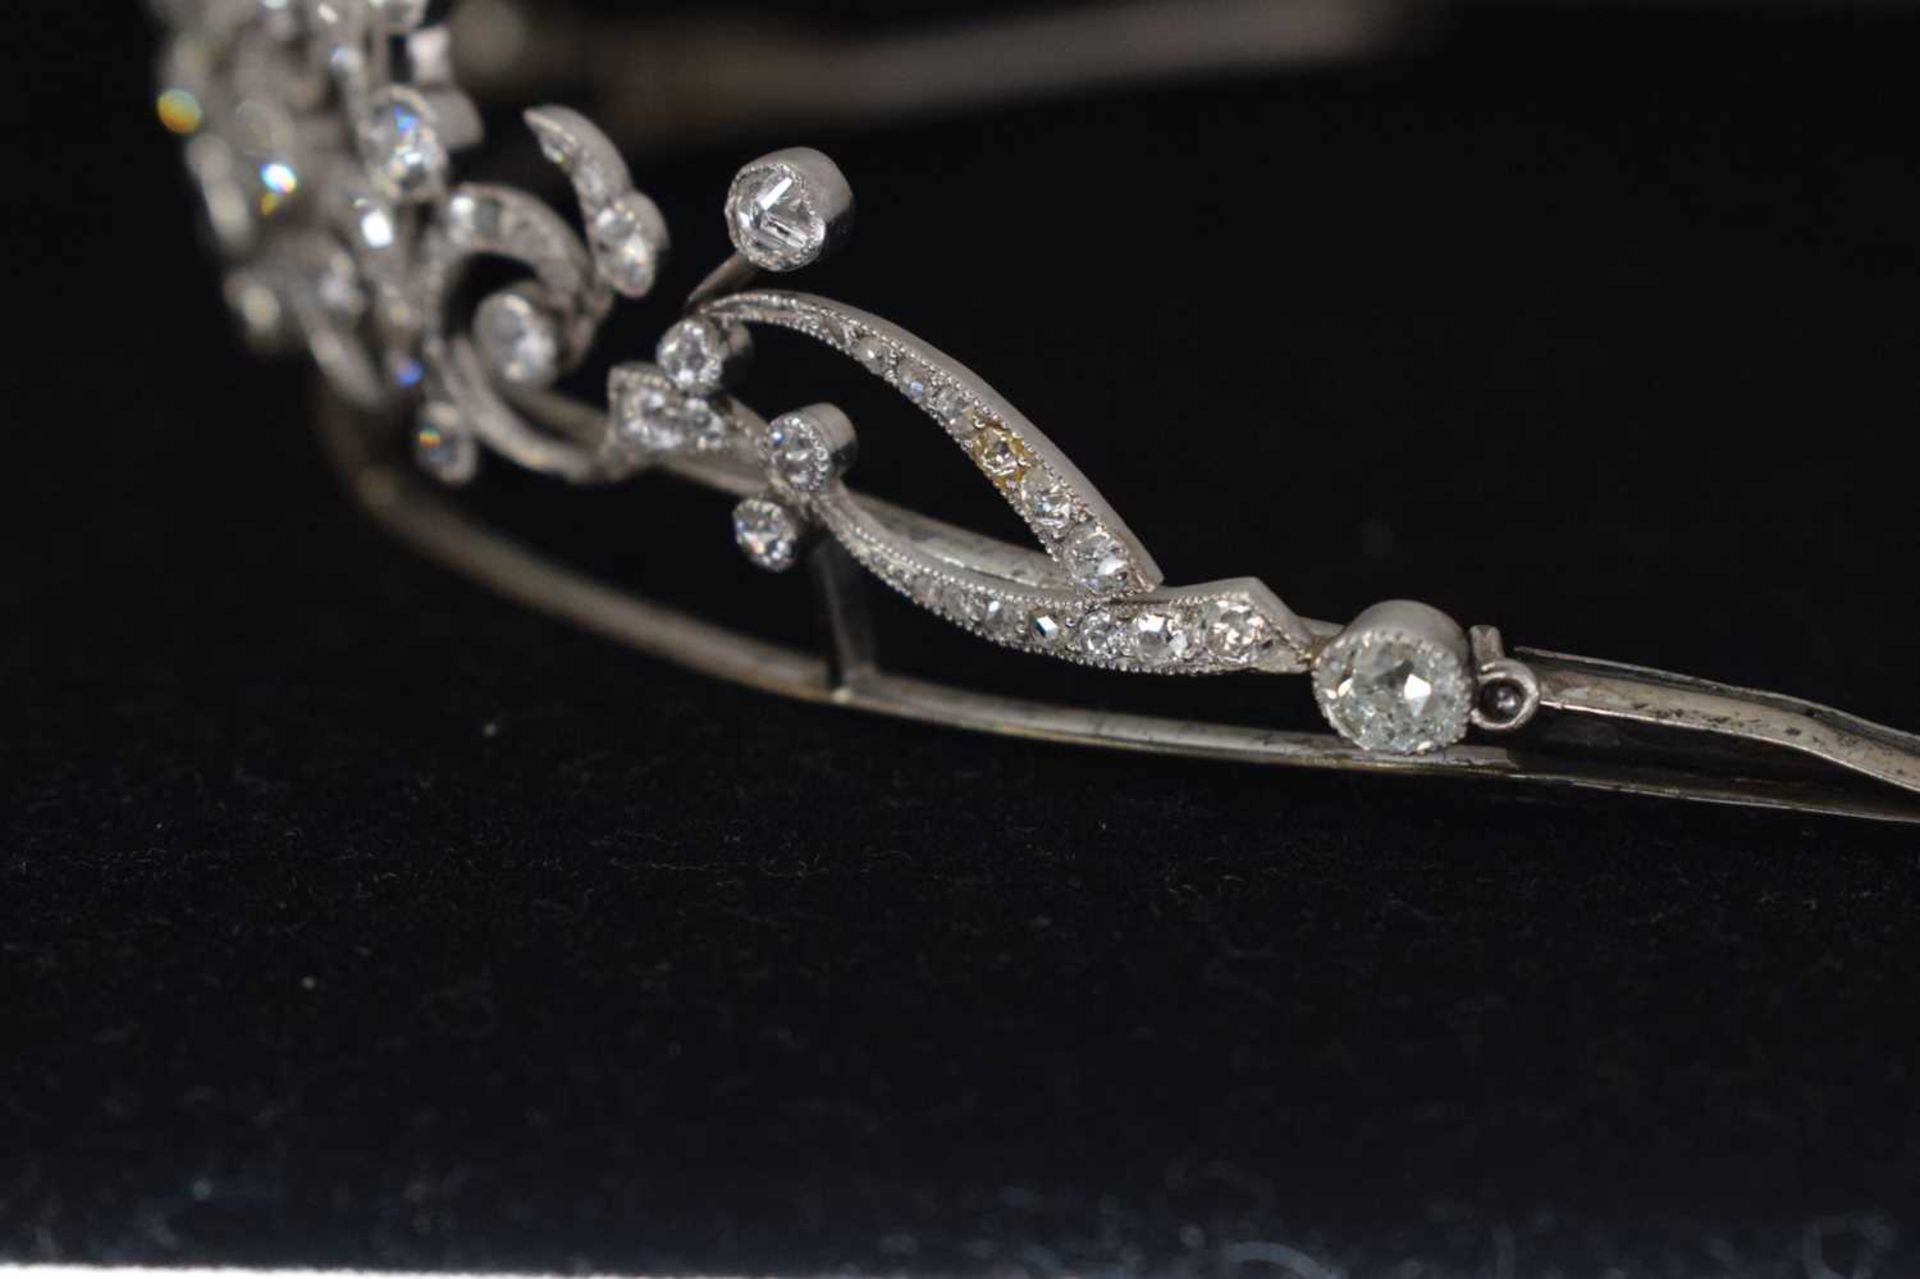 Early 20th century Belle Époque diamond tiara - Image 9 of 37